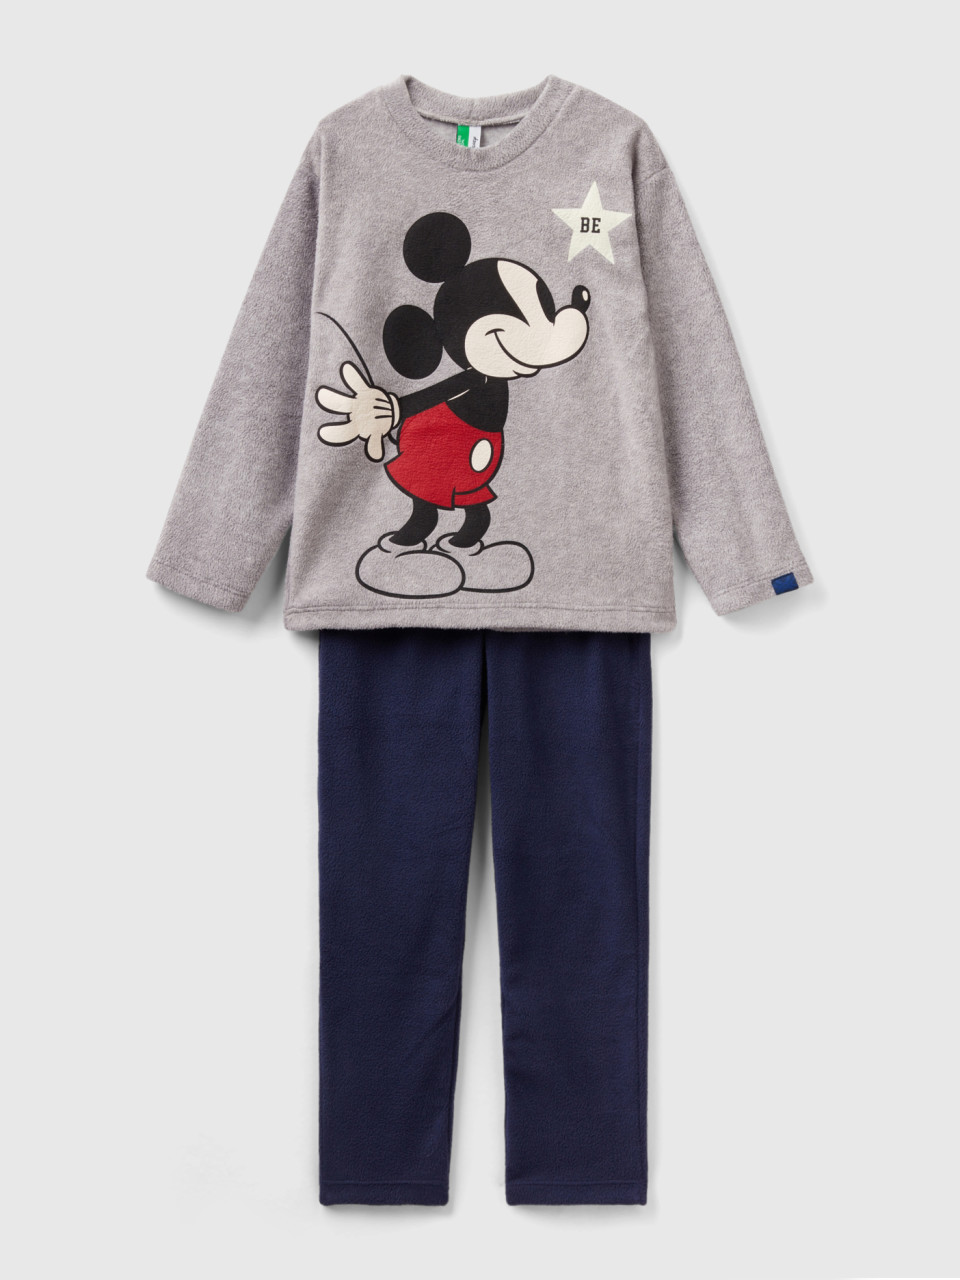 Benetton, Pyjamas With Mickey Mouse Fleece, Light Gray, Kids